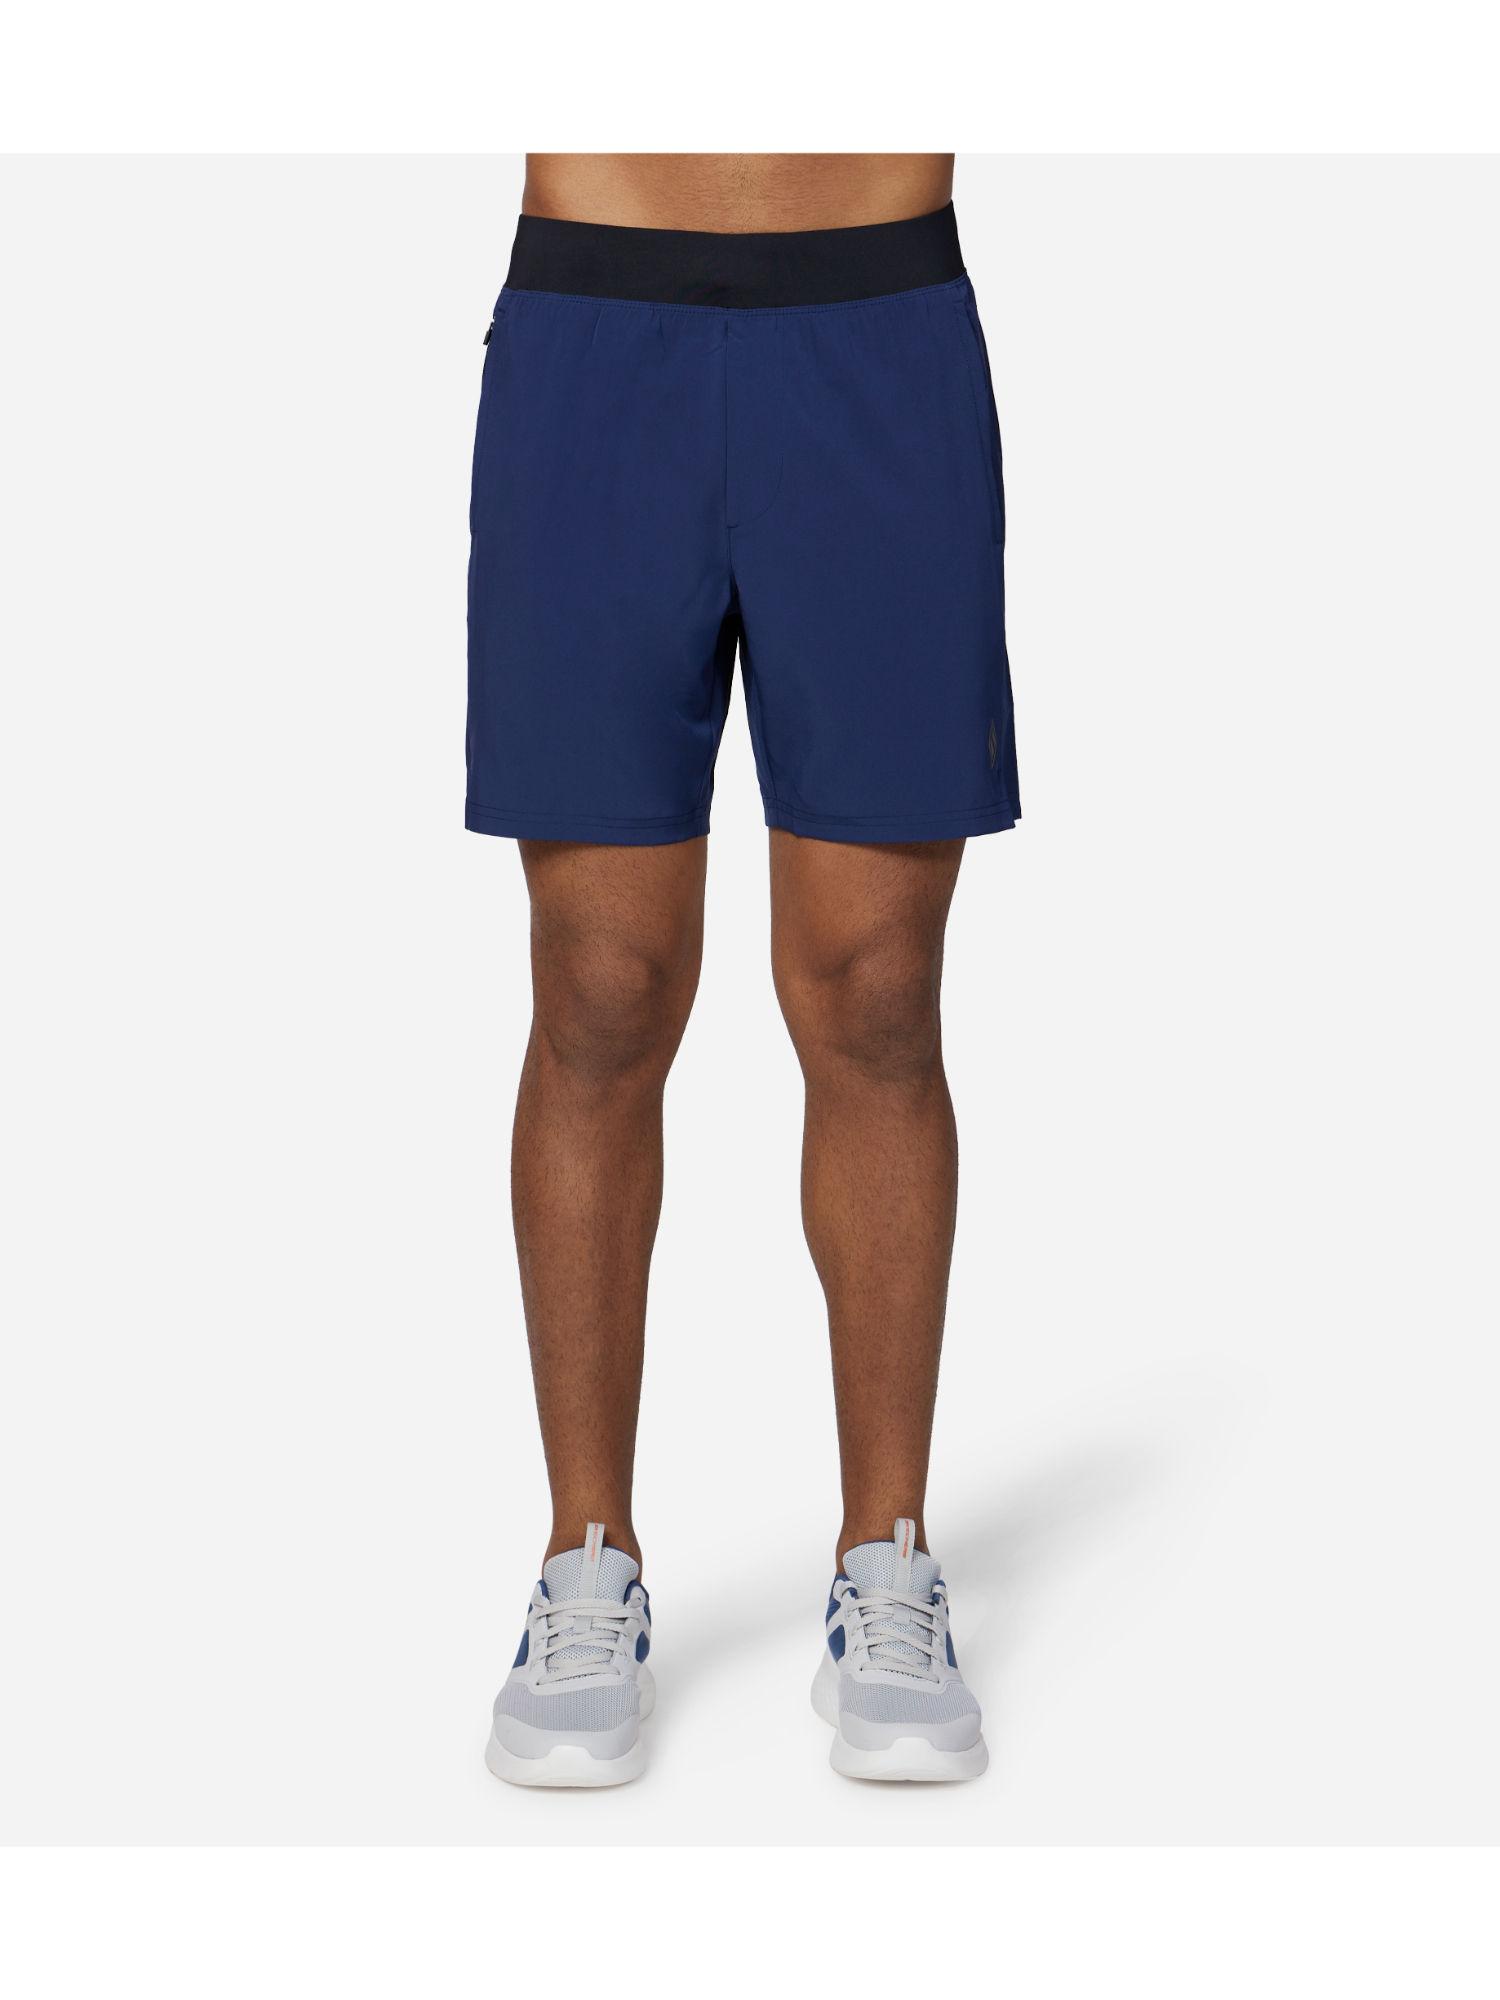 movement 7 inch ii shorts navy blue